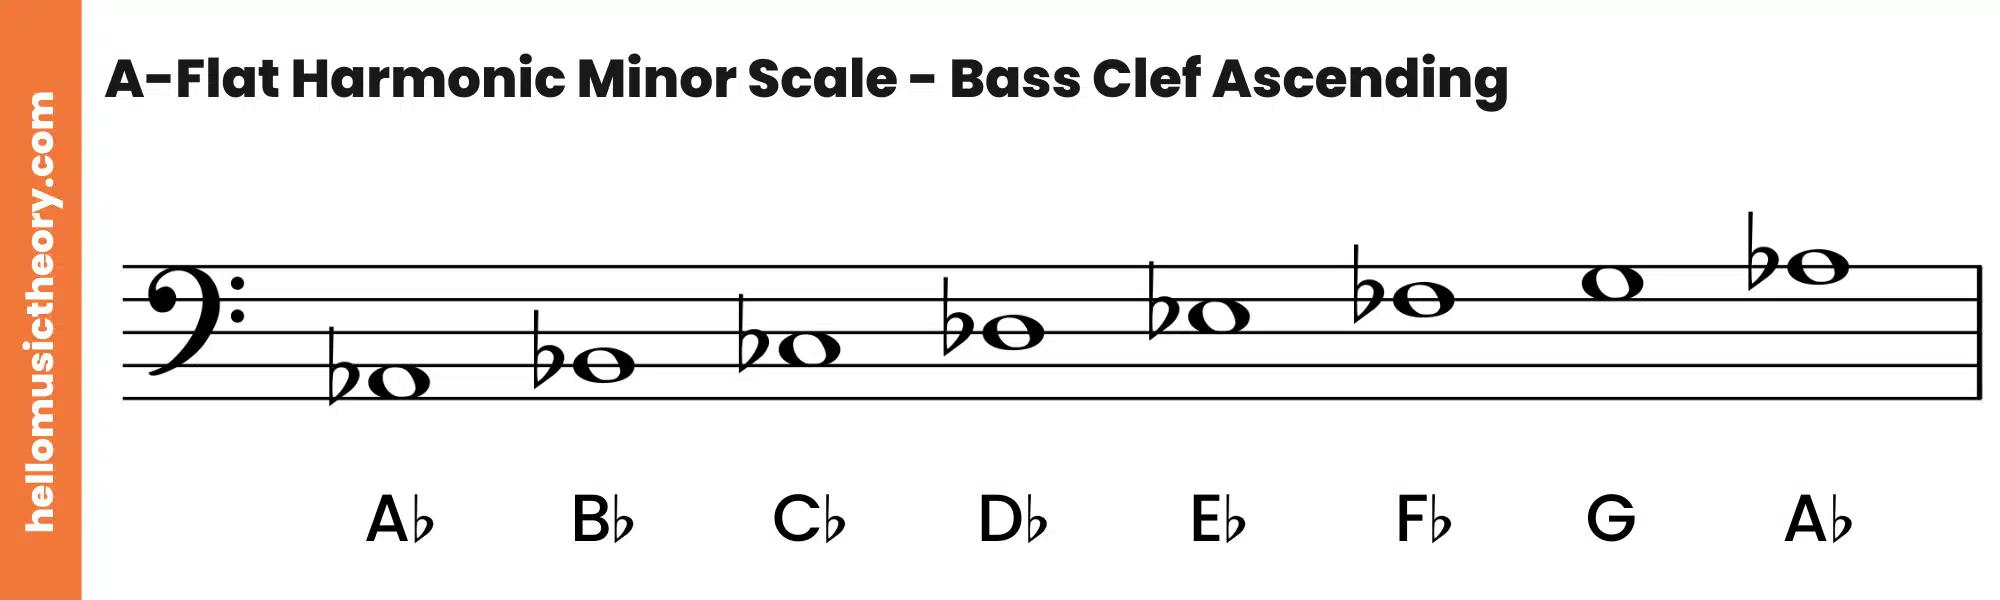 A-Flat Harmonic Minor Scale Bass Clef Ascending